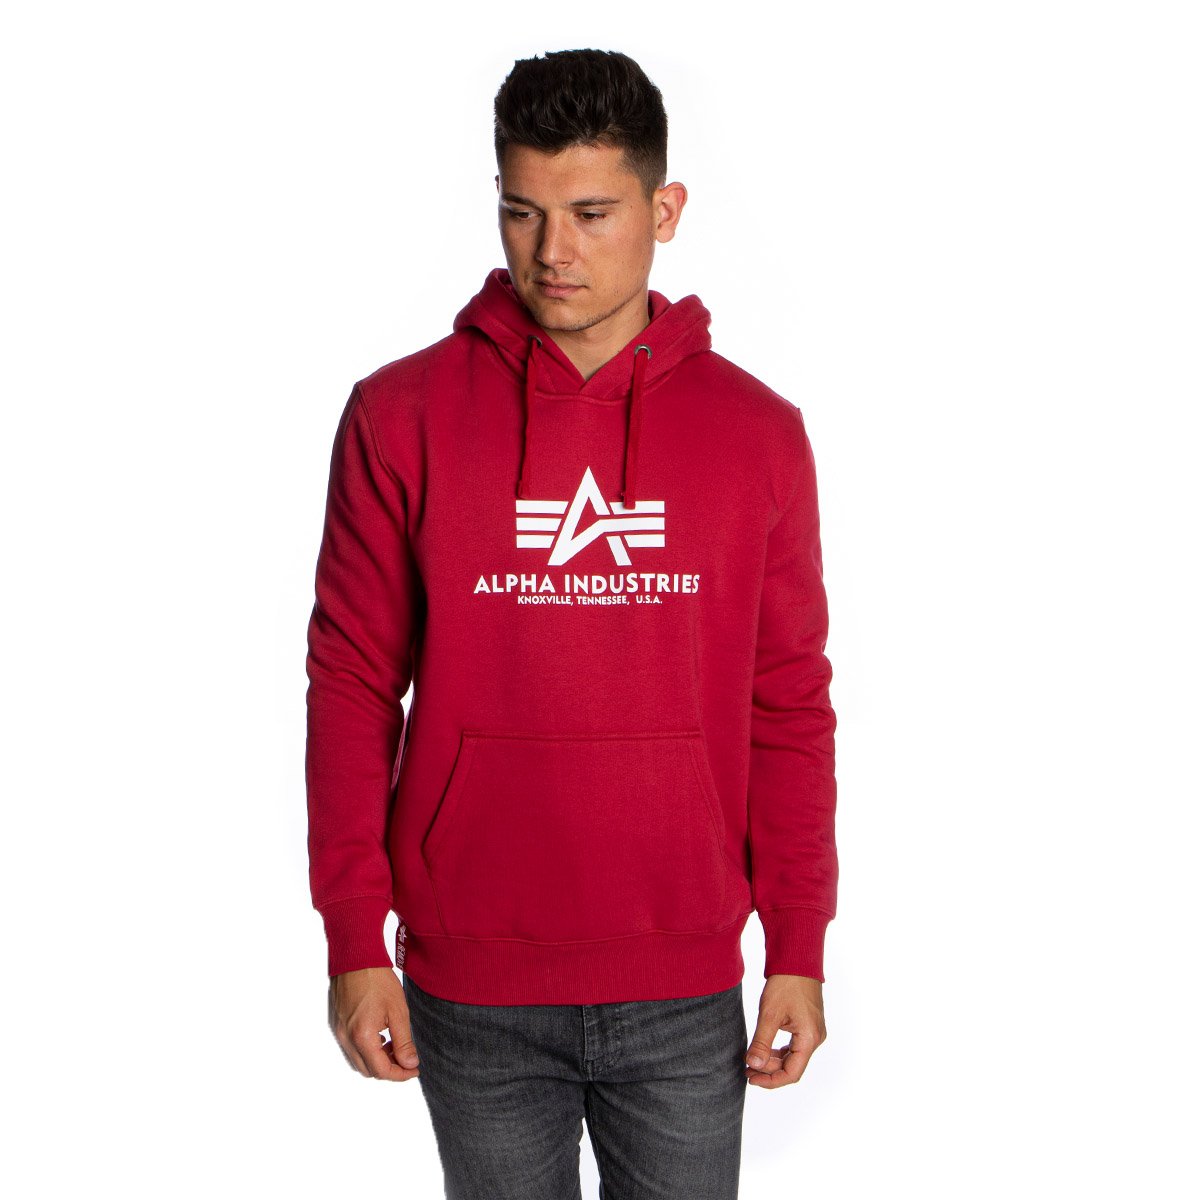 Alpha Industries Sweatshirt Basic red rbf Hoody